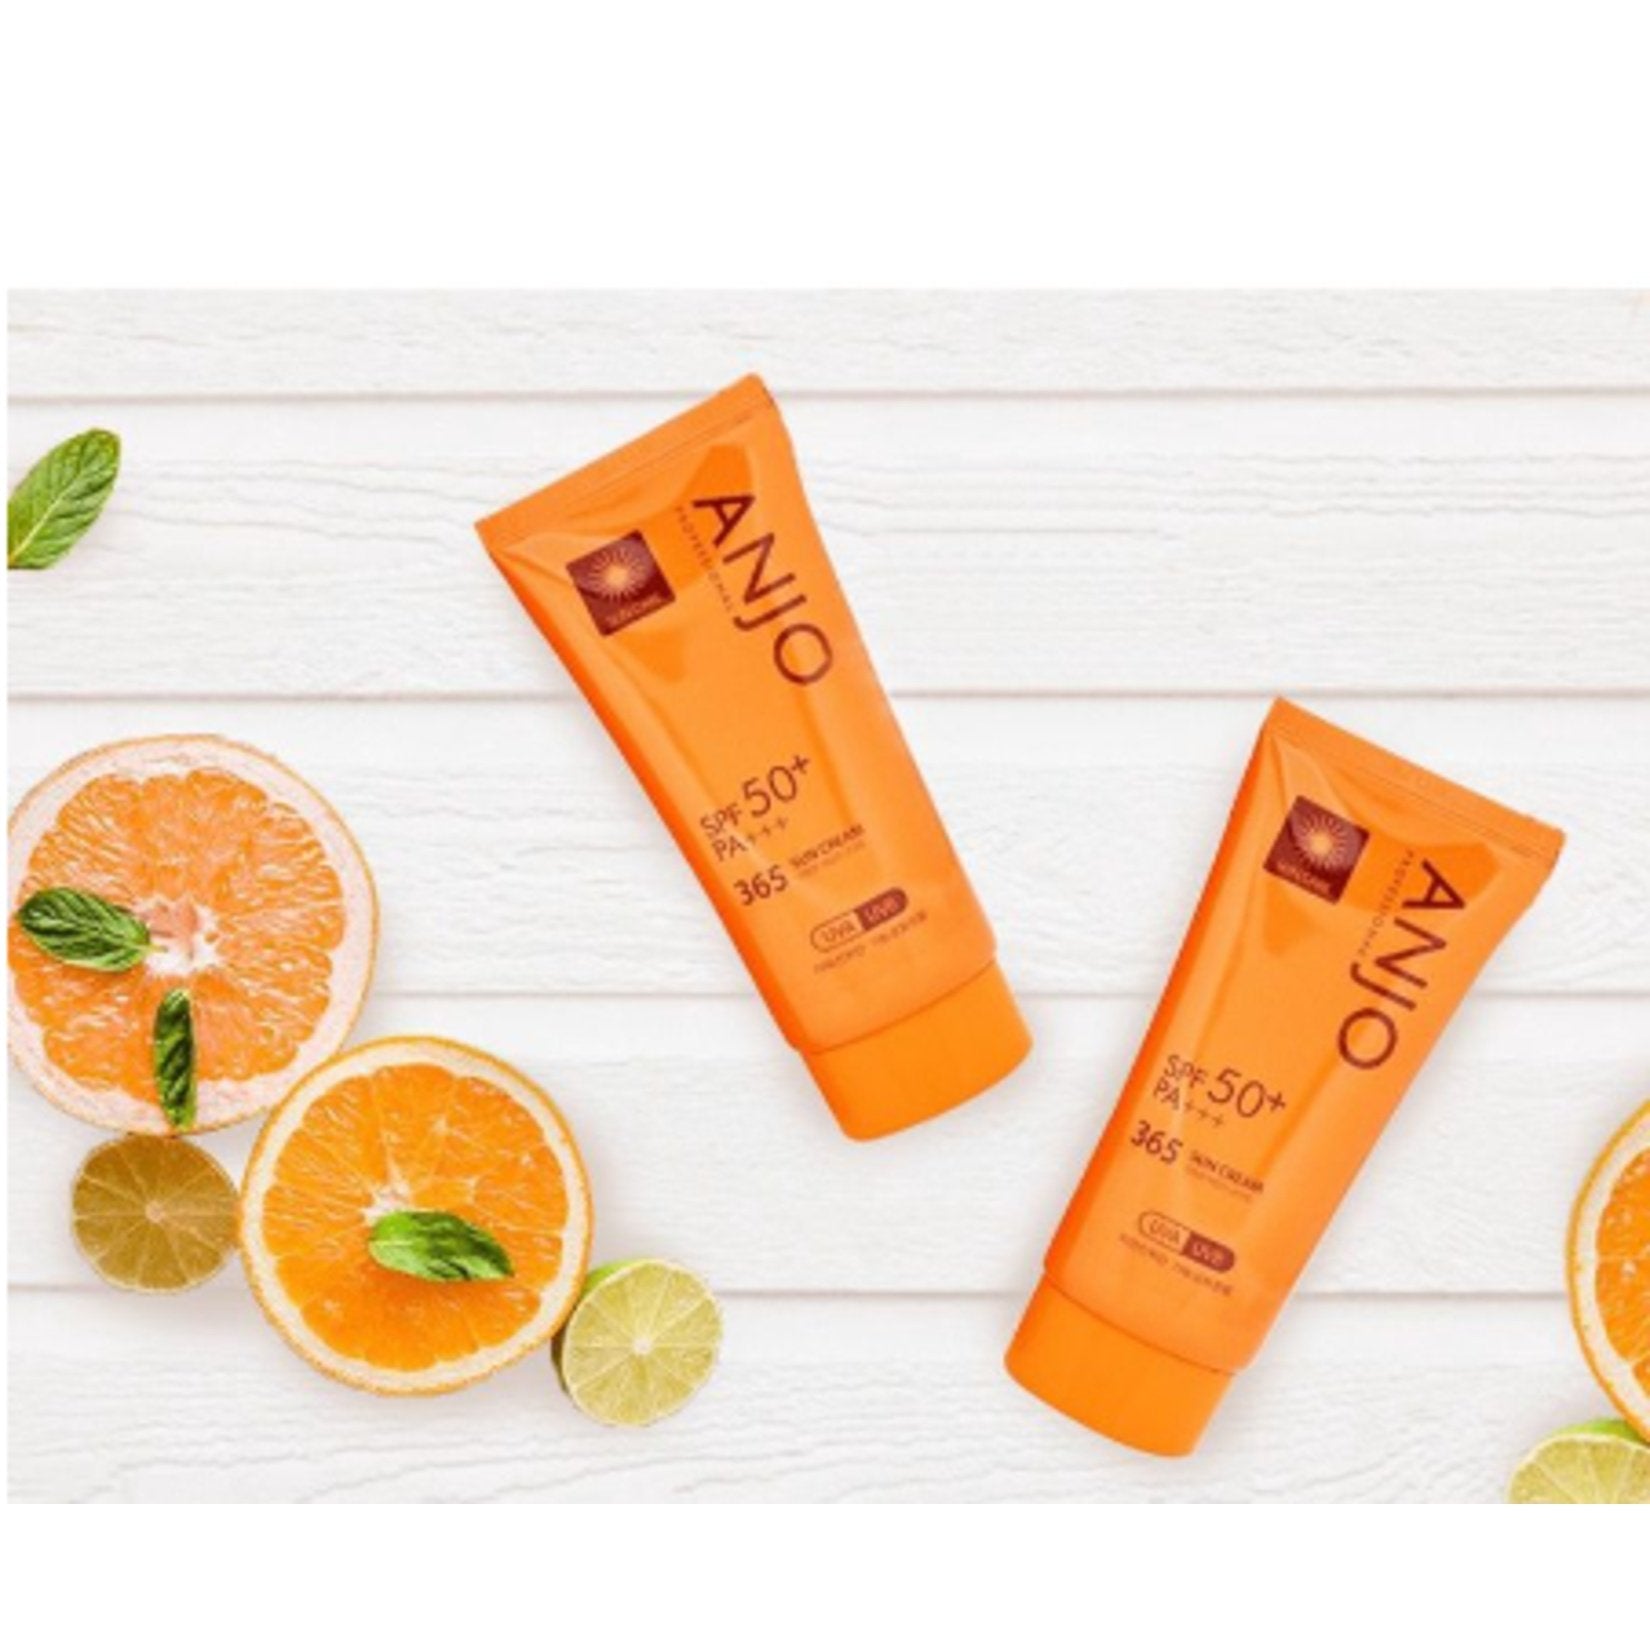 2pcs Anjo Professional 365 Sun Creams 70g SPF 50+PA+++ Sunscreens Facial Body UV Sunblock non-sticky moisturizing